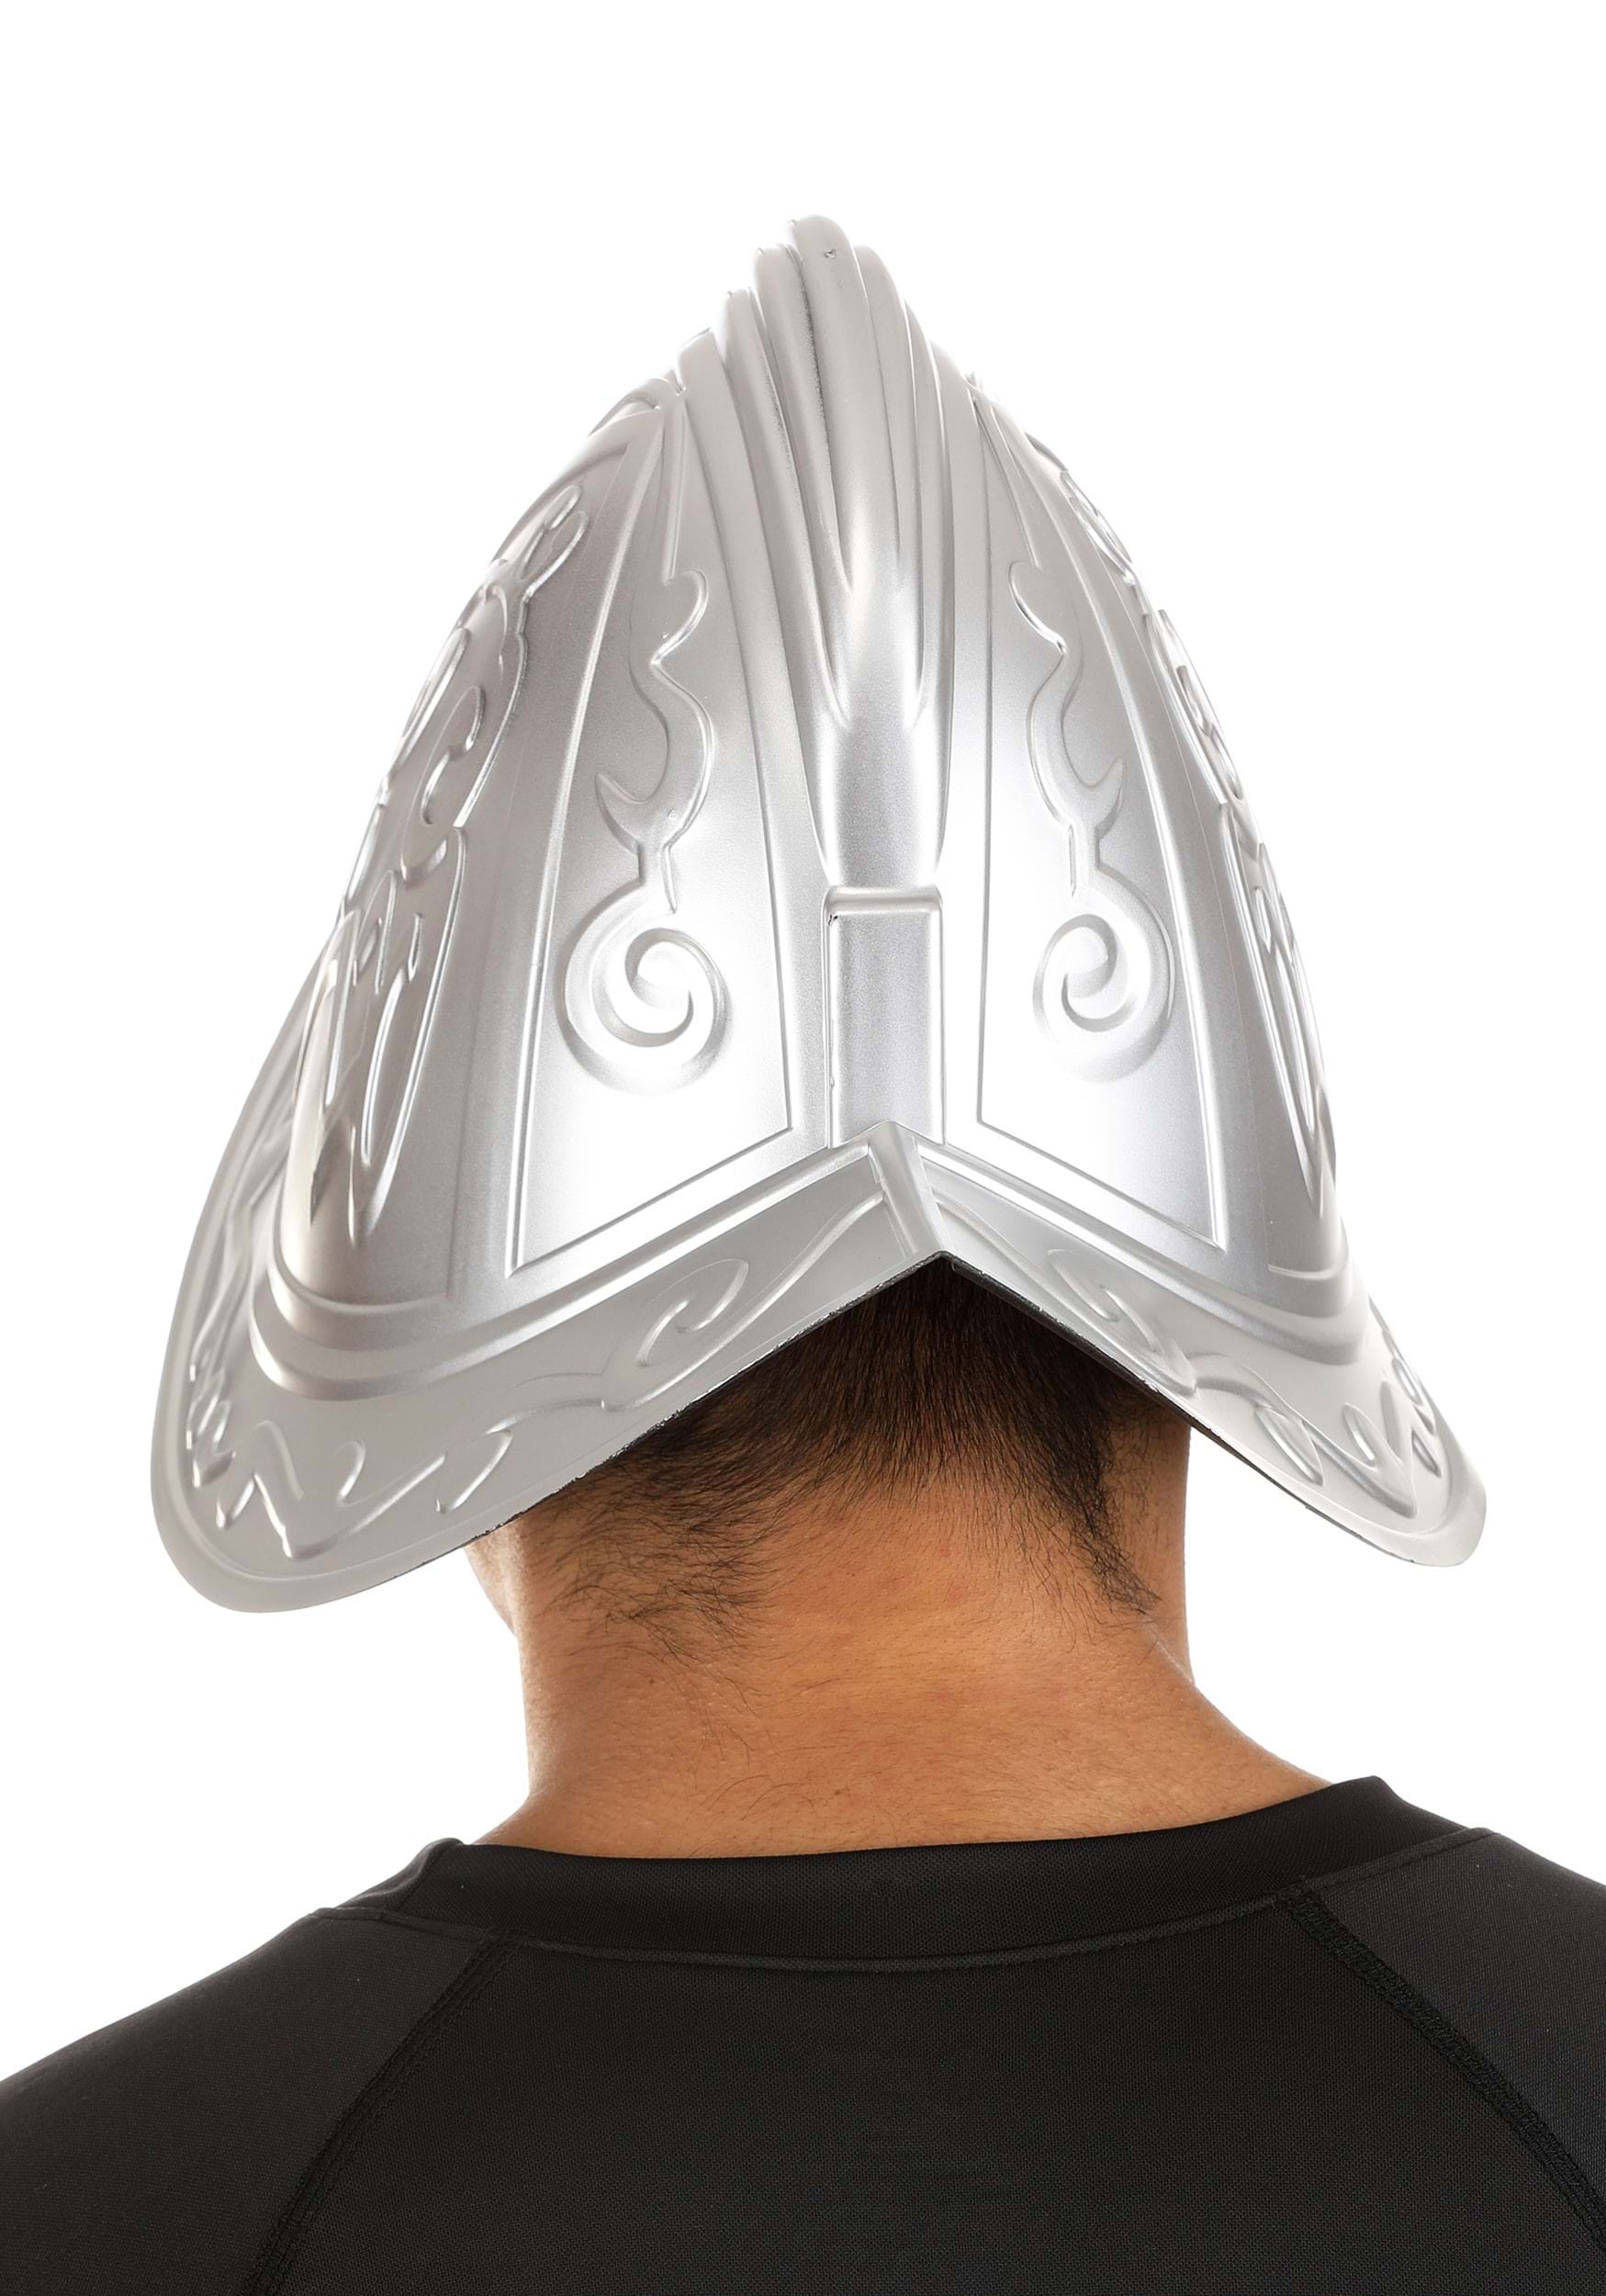 Explorer's Silver Fancy Dress Costume Helmet